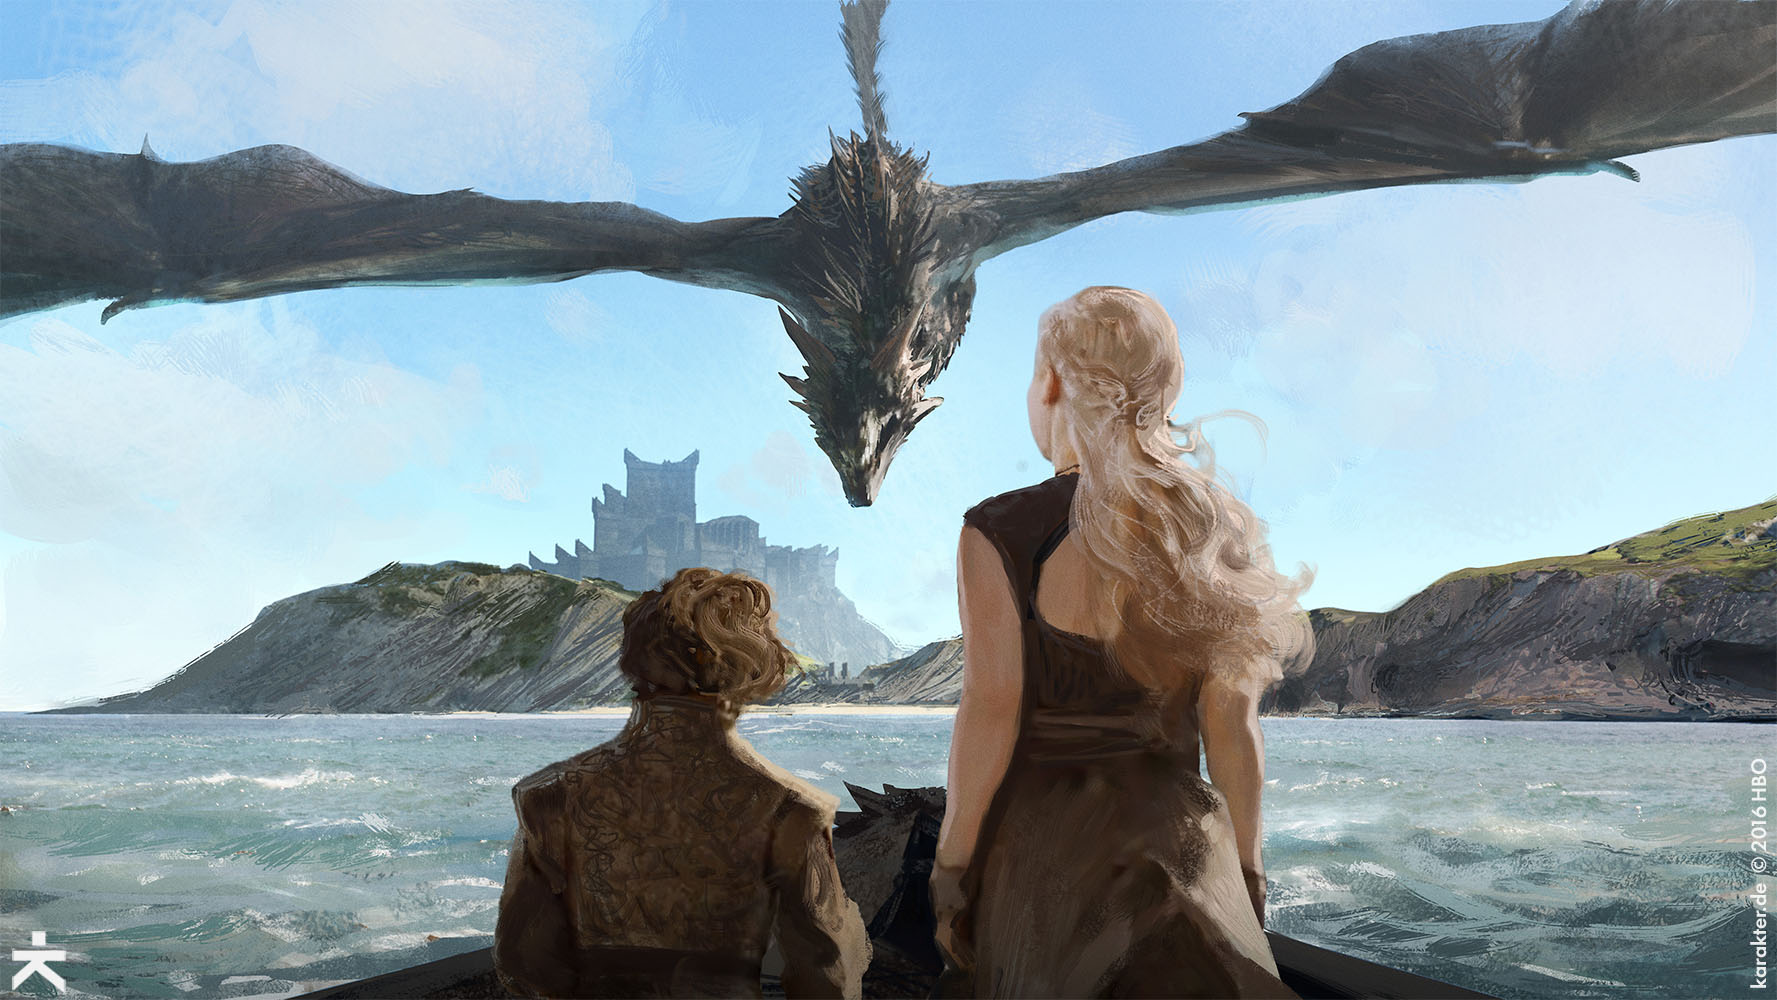 Fine Art: The Art Of Games Of Thrones Season 7